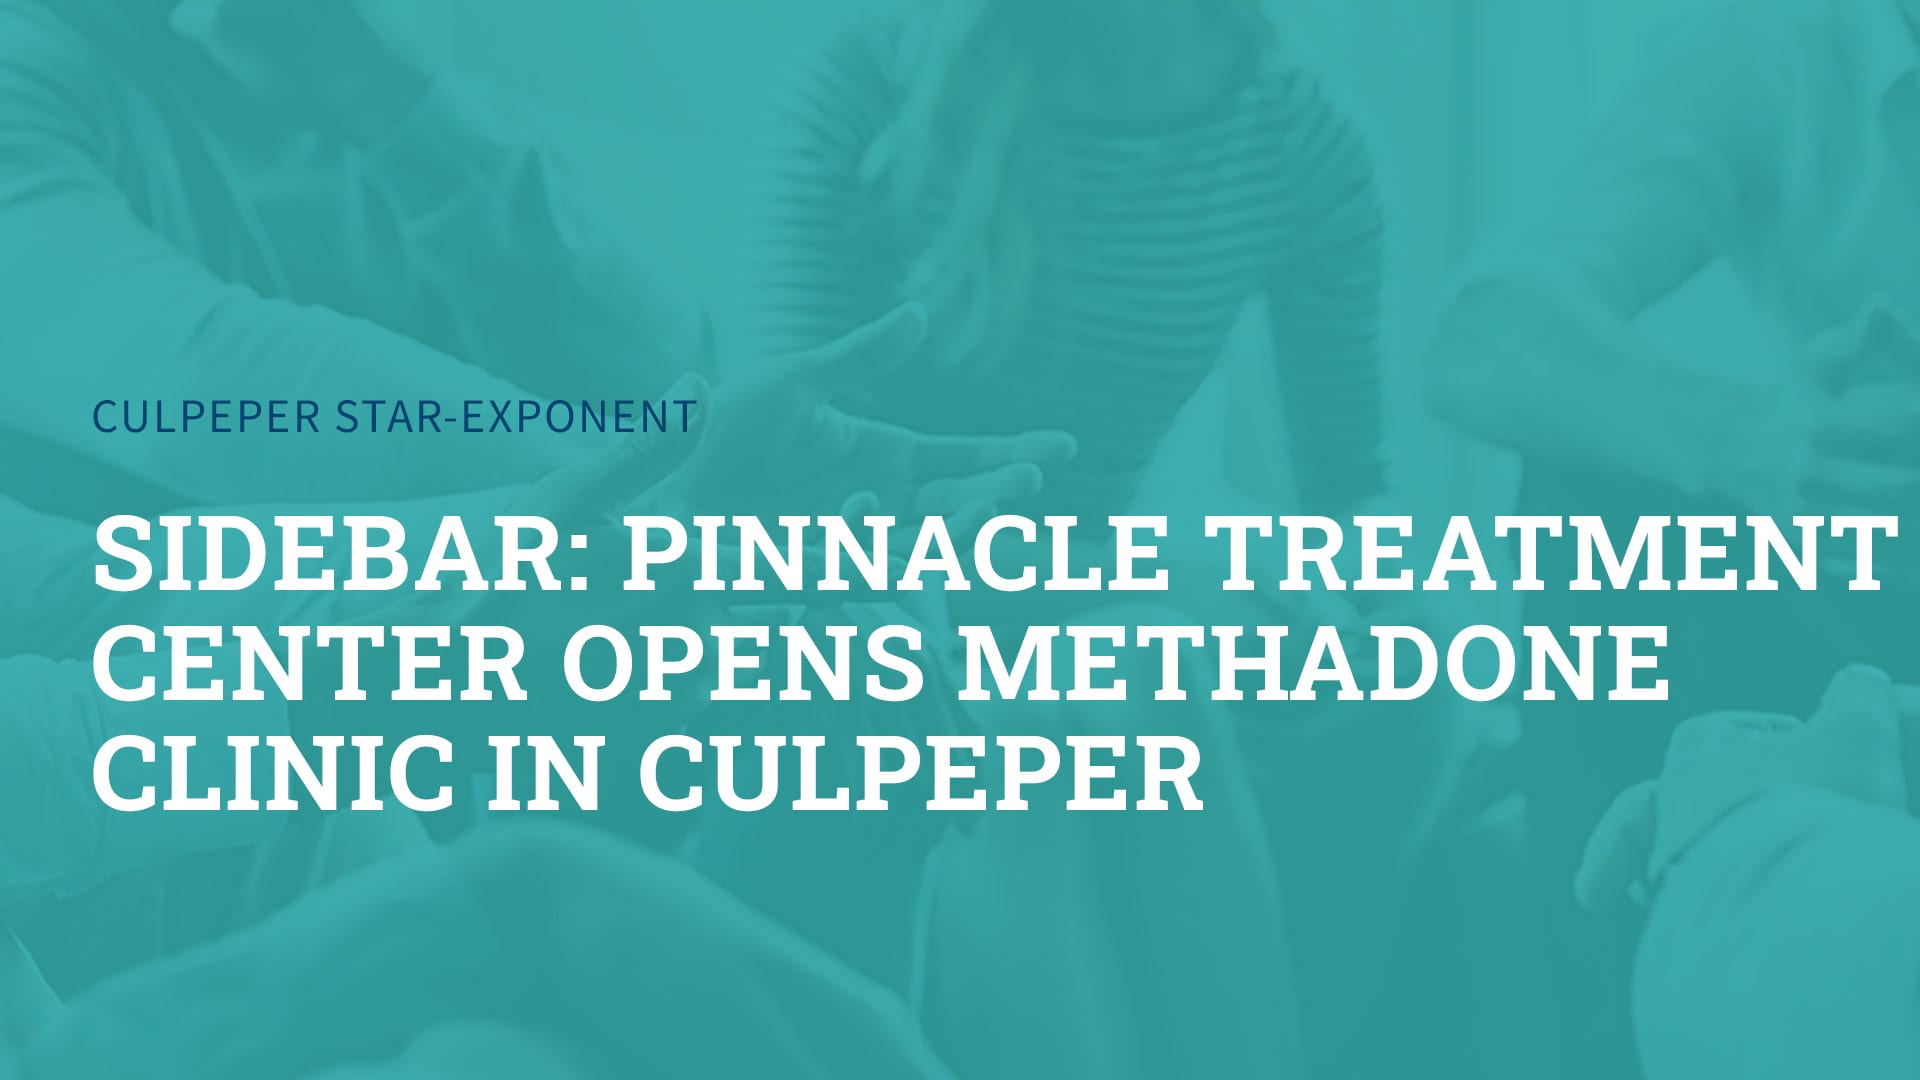 methodone clinic in culpeper